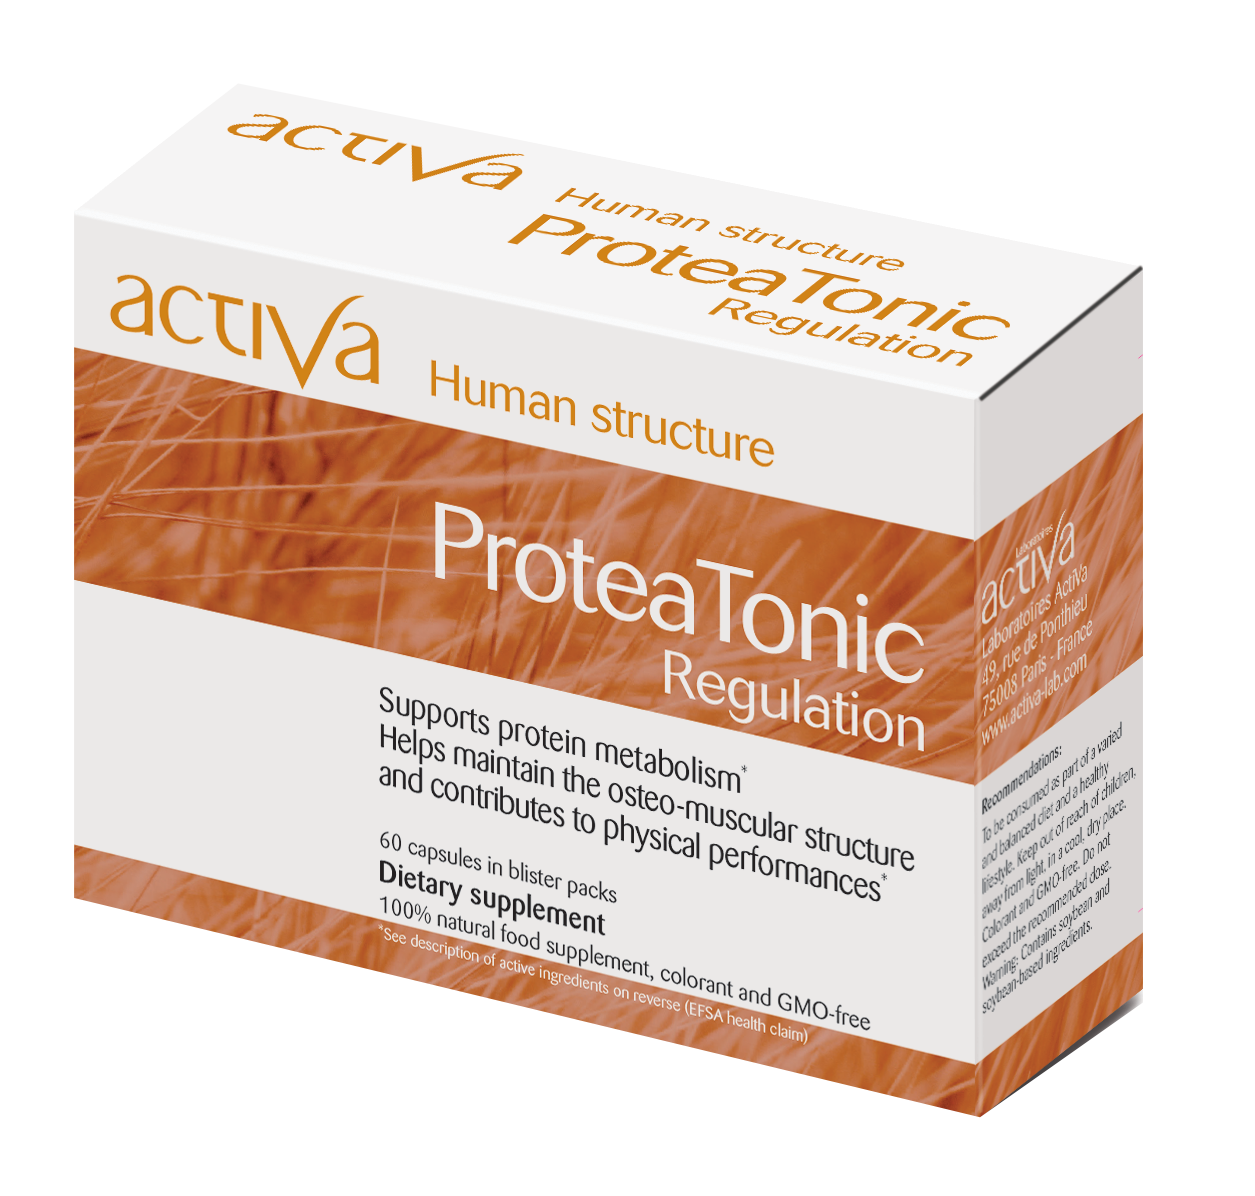 Proteatonic Regulation